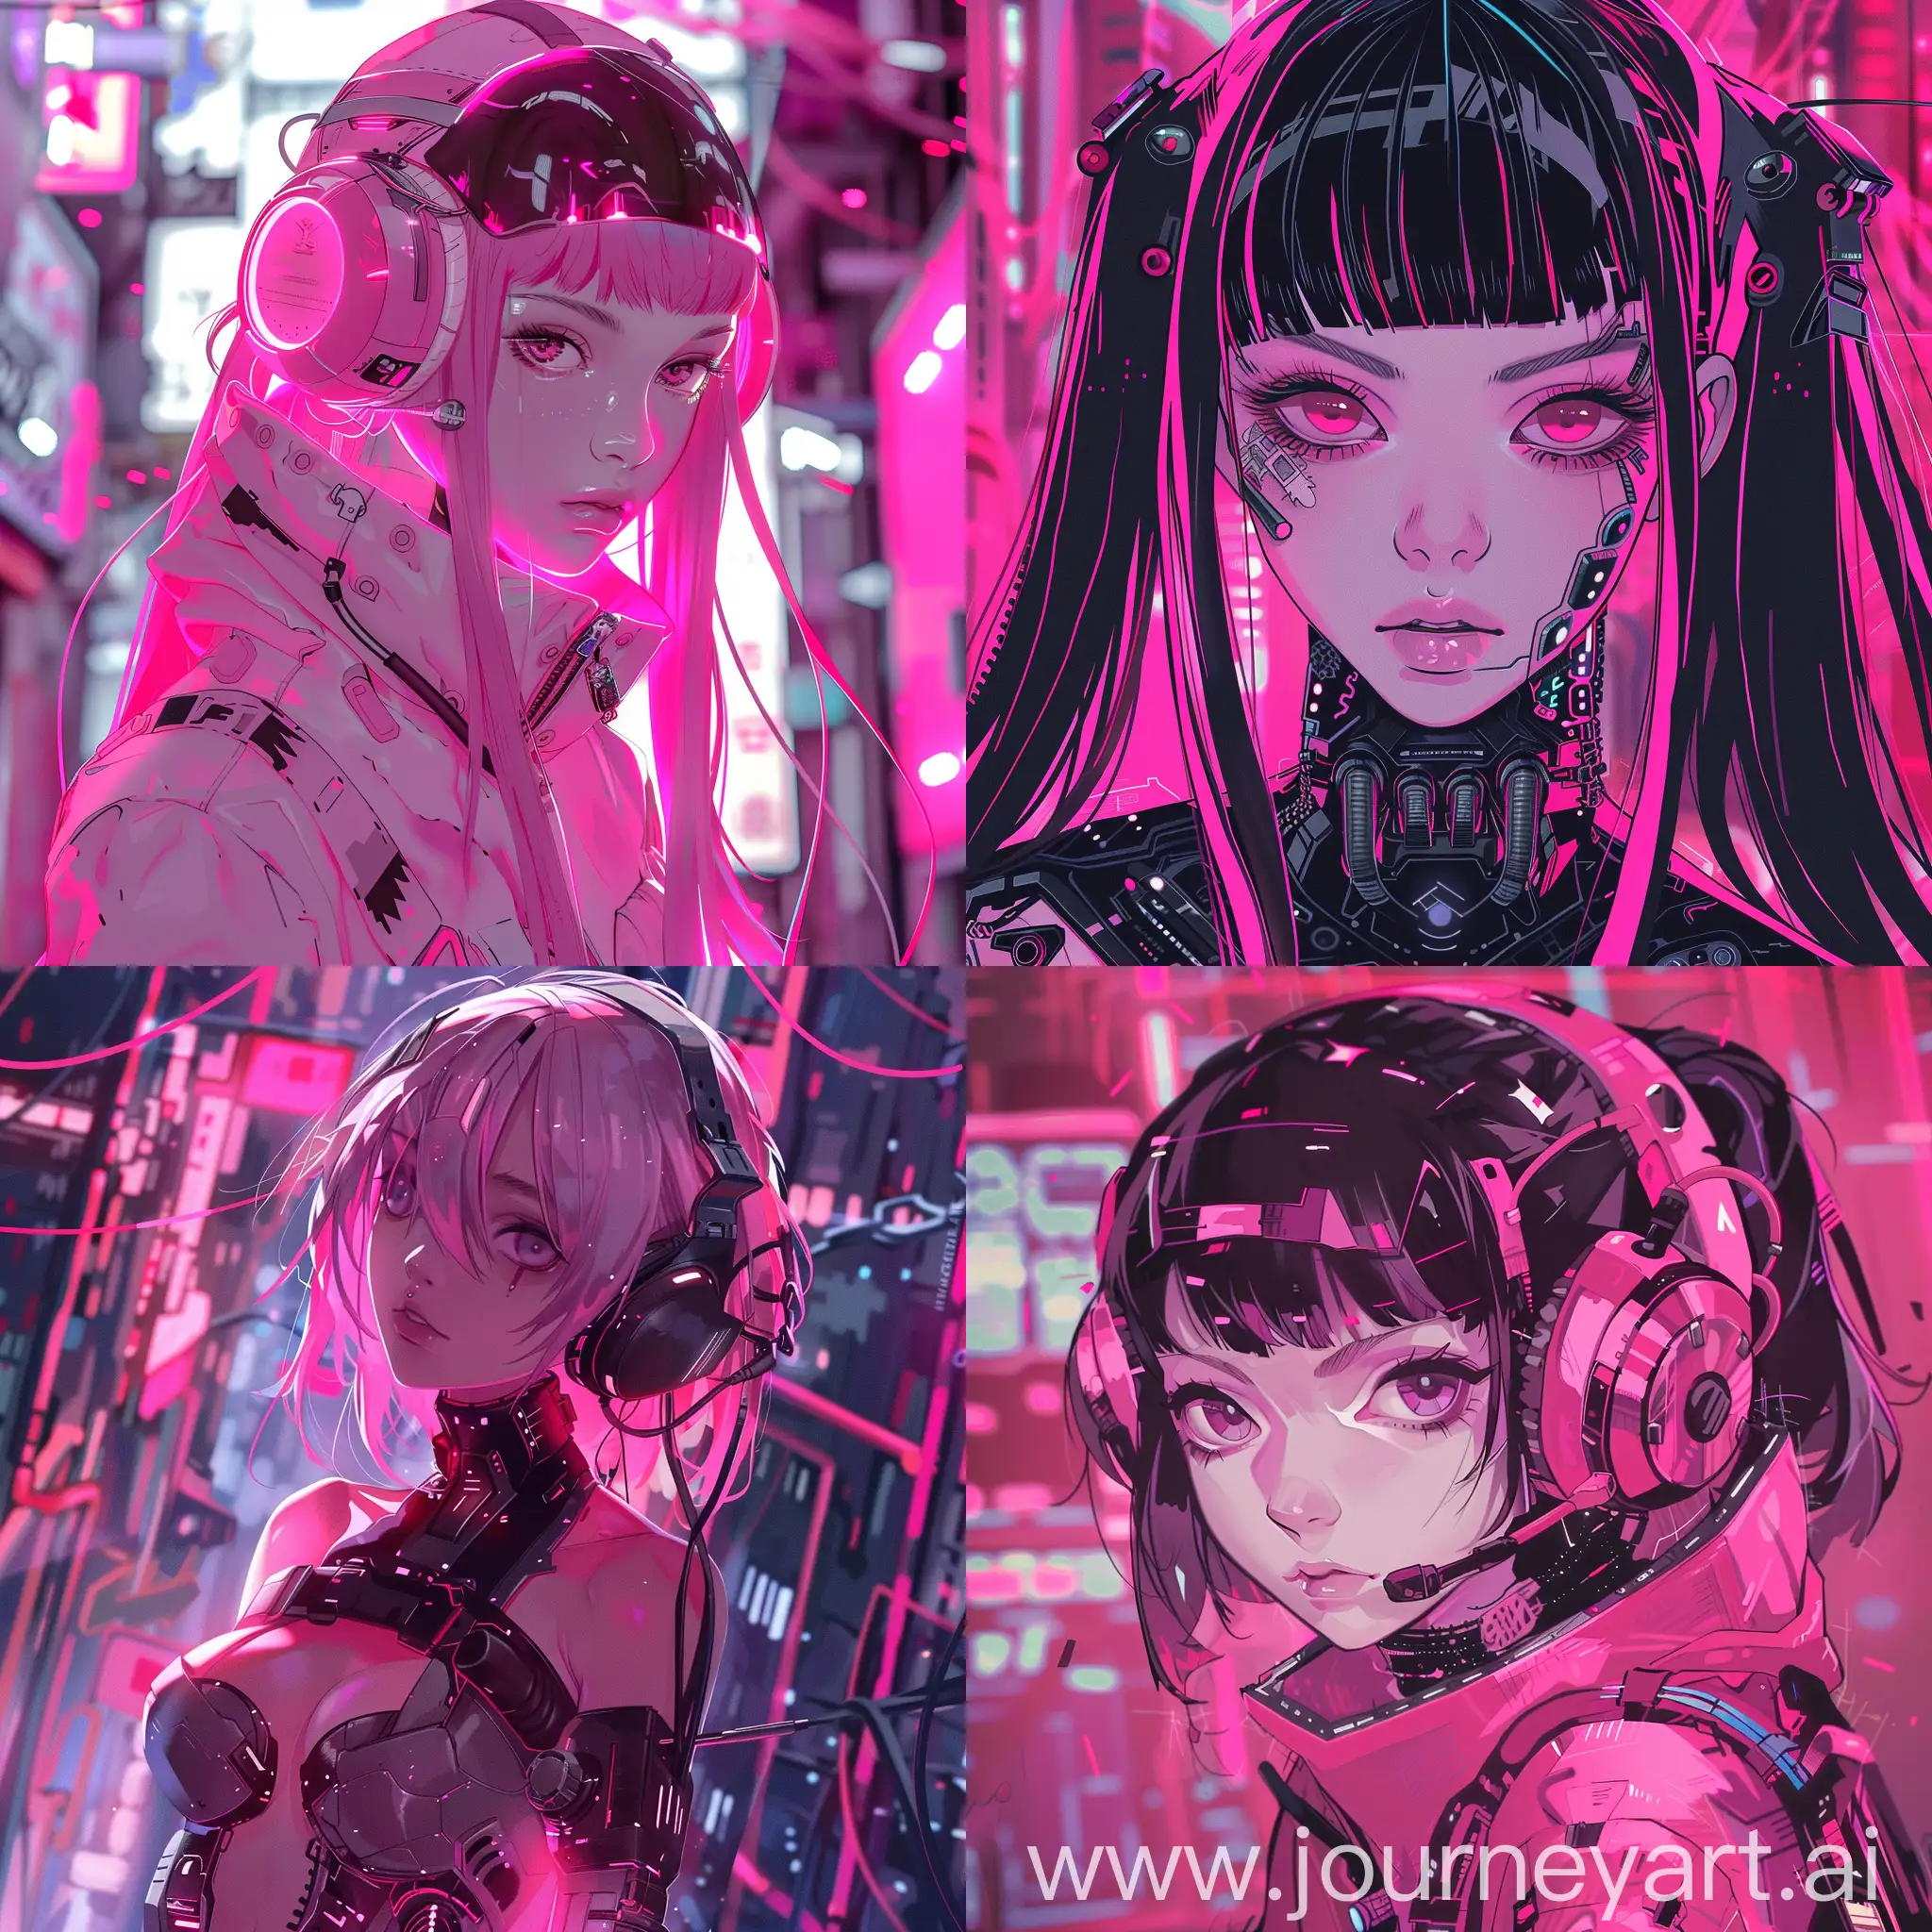 Futuristic-Anime-Girl-Embracing-Cyber-Aesthetics-in-Vibrant-Pink-Tones-HD-Quality-Cyberpunk-Cartoon